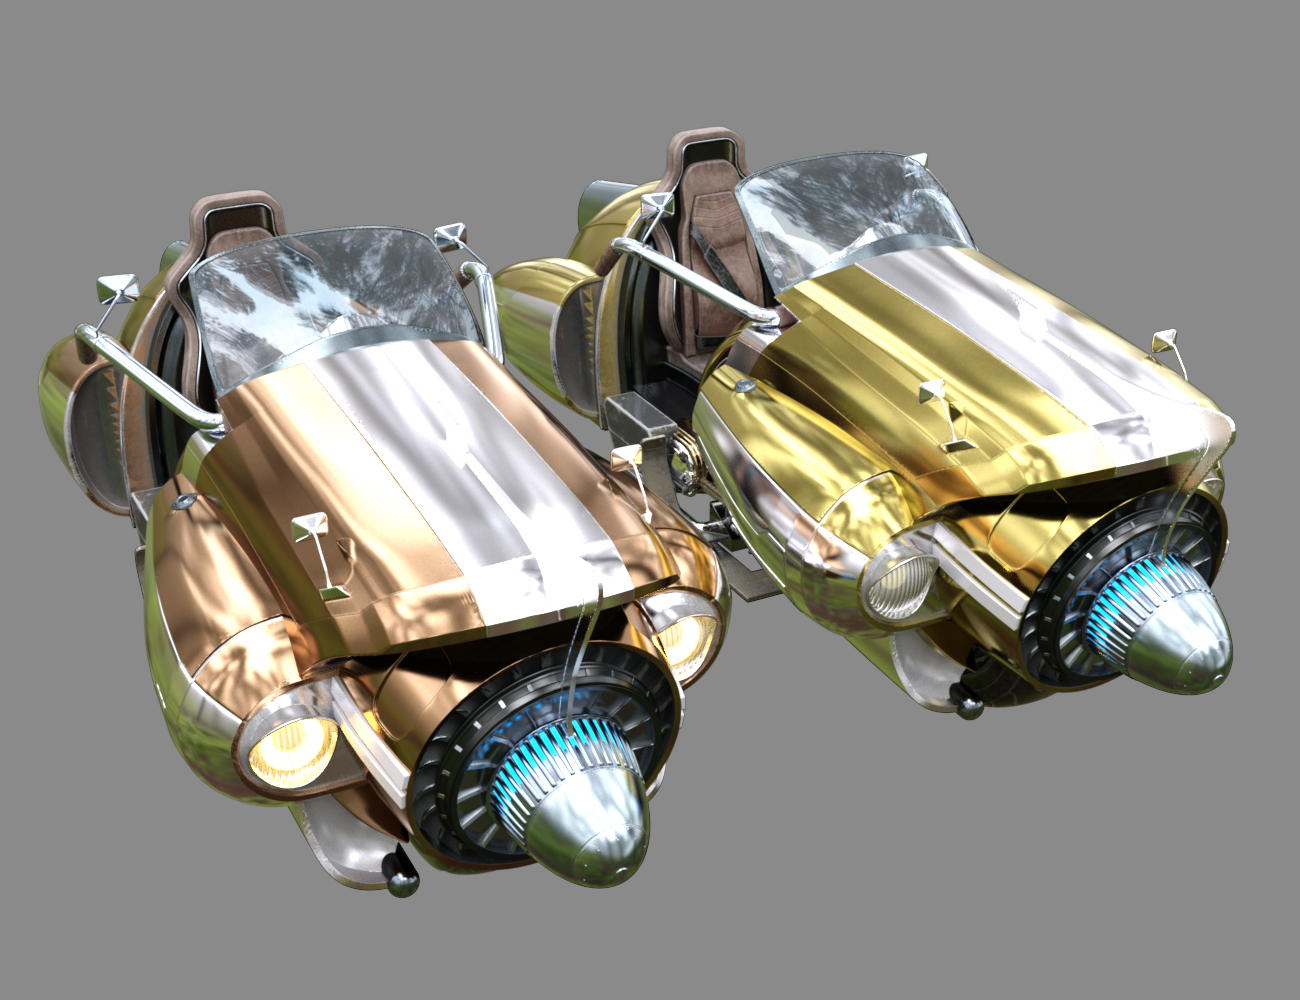 XI Retro Futuristic Cruiser Motorcycle by: Xivon, 3D Models by Daz 3D